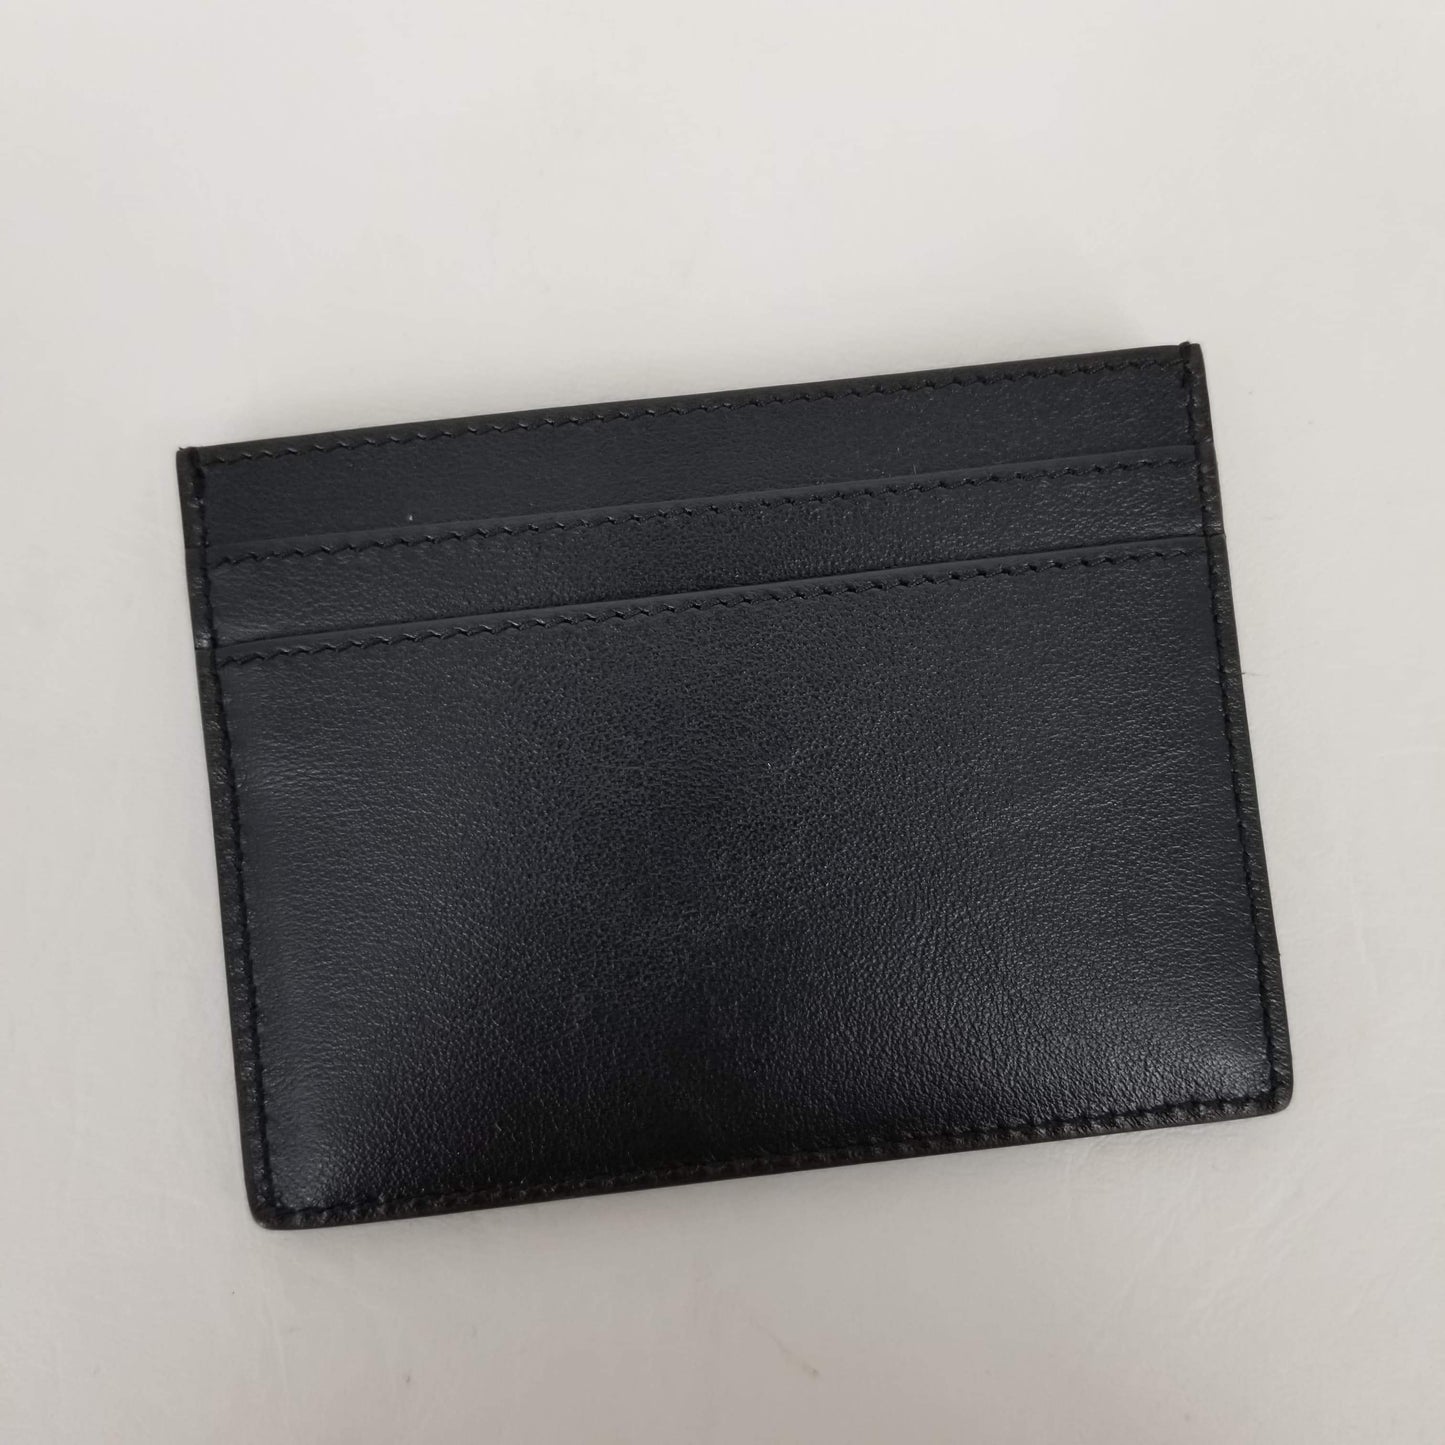 Authentic Saint Laurent Black Leather Studded Card Holder